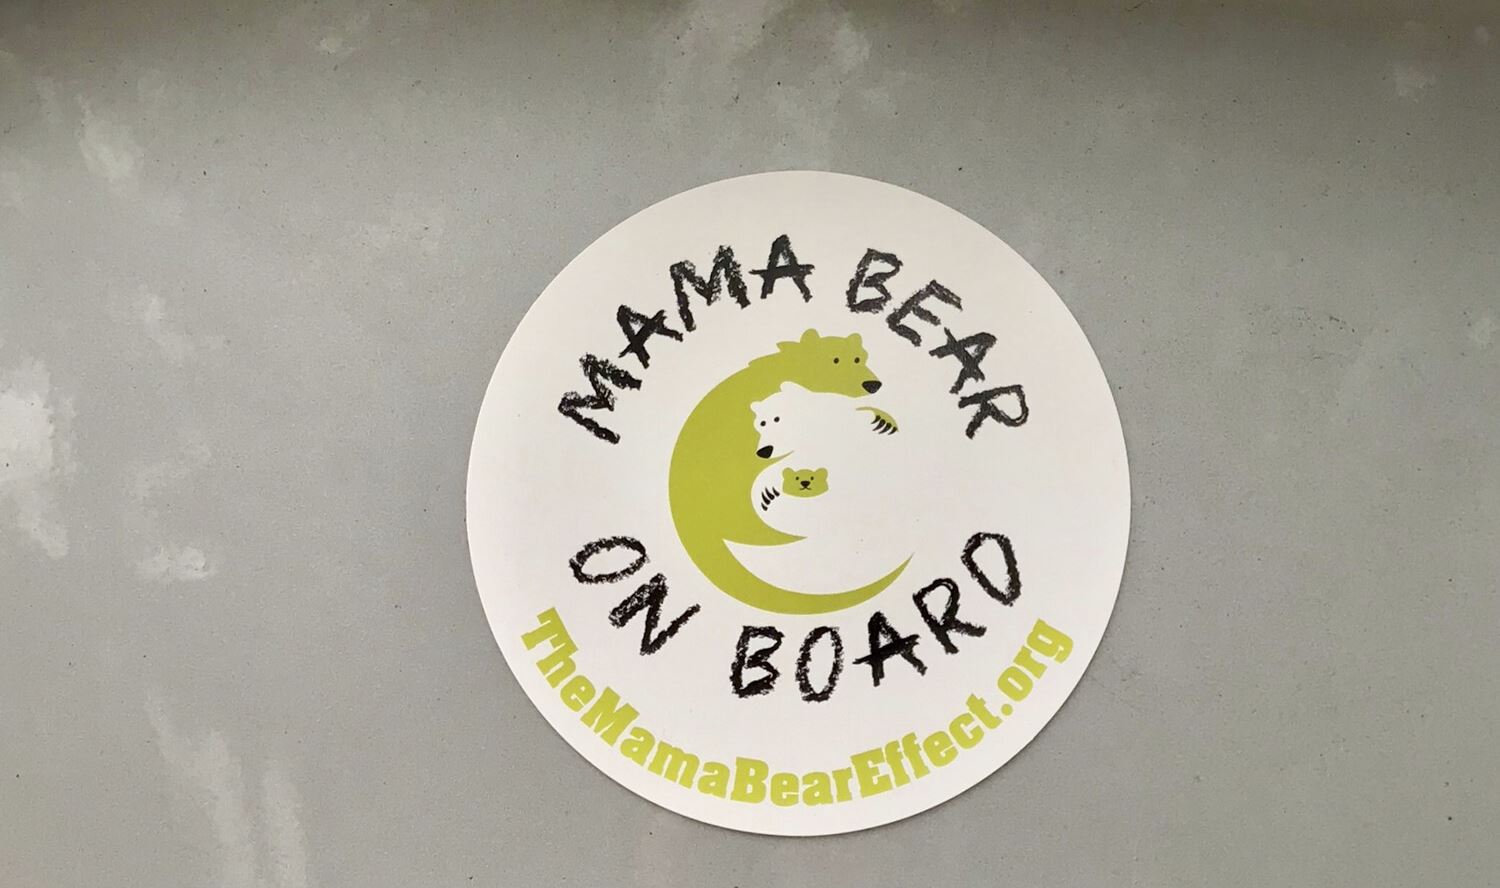 Foto: The Mama Bear sticker